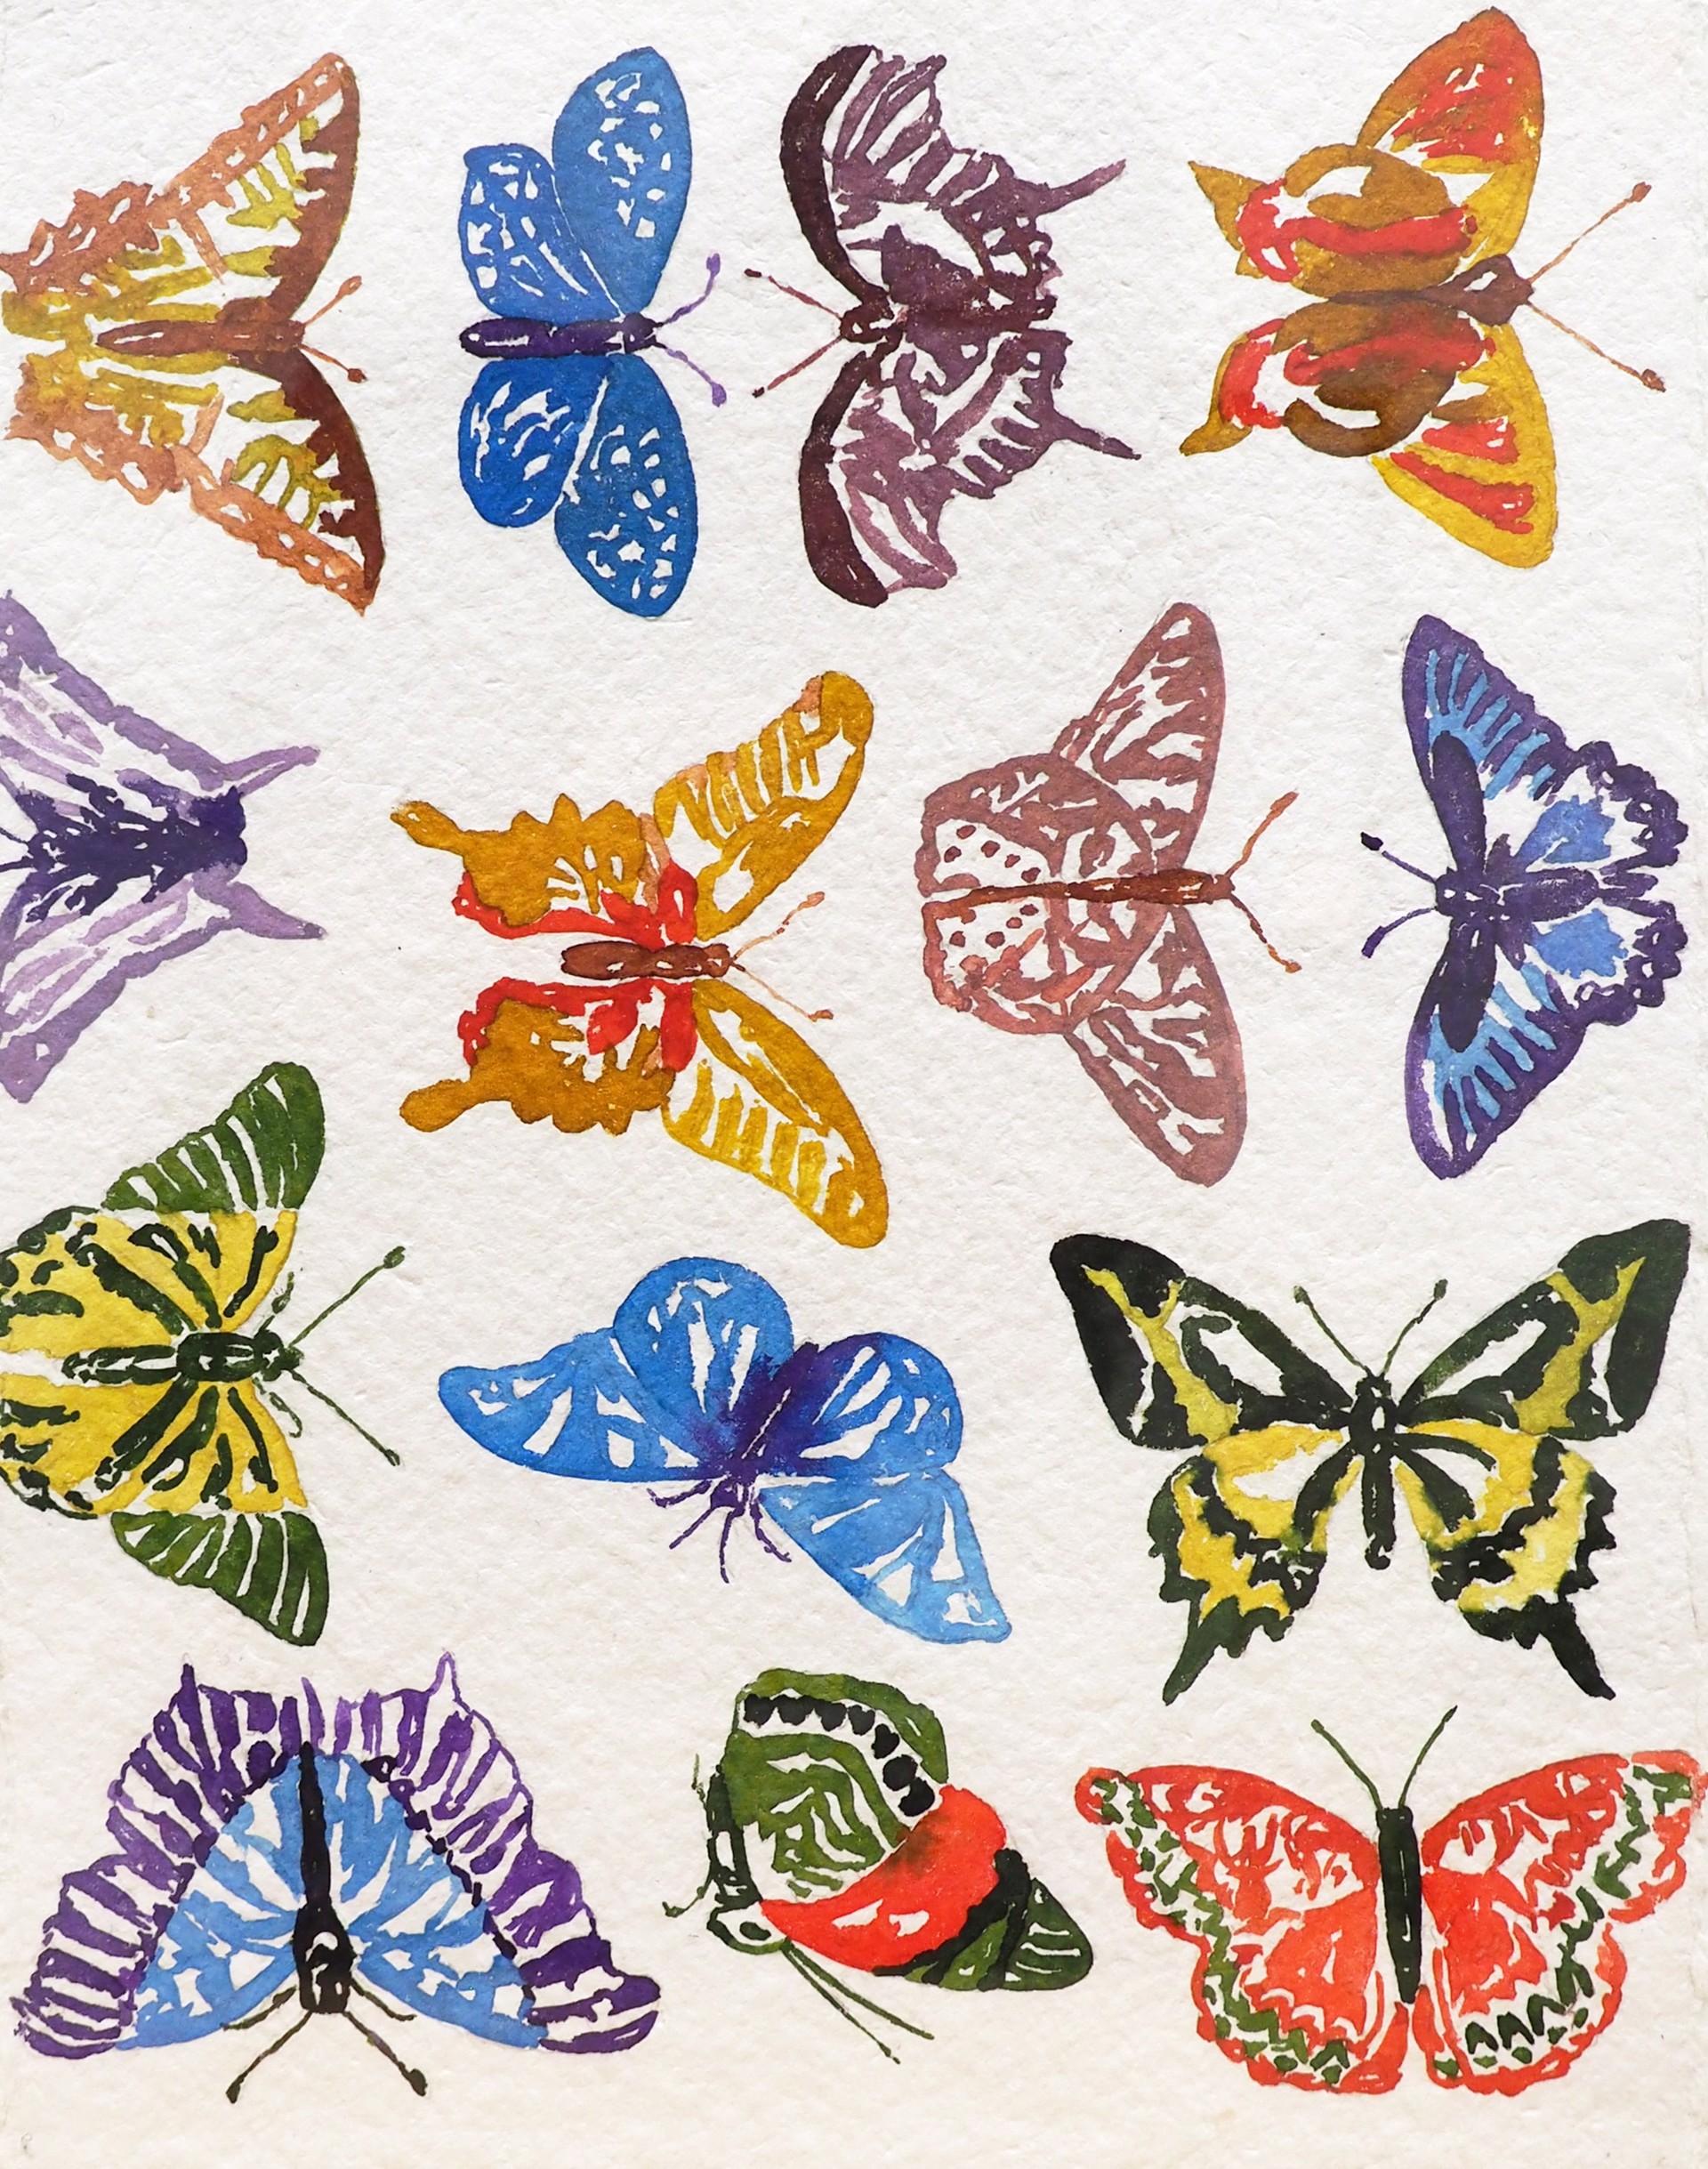 Butterflies by Carlos Gamez de Francisco